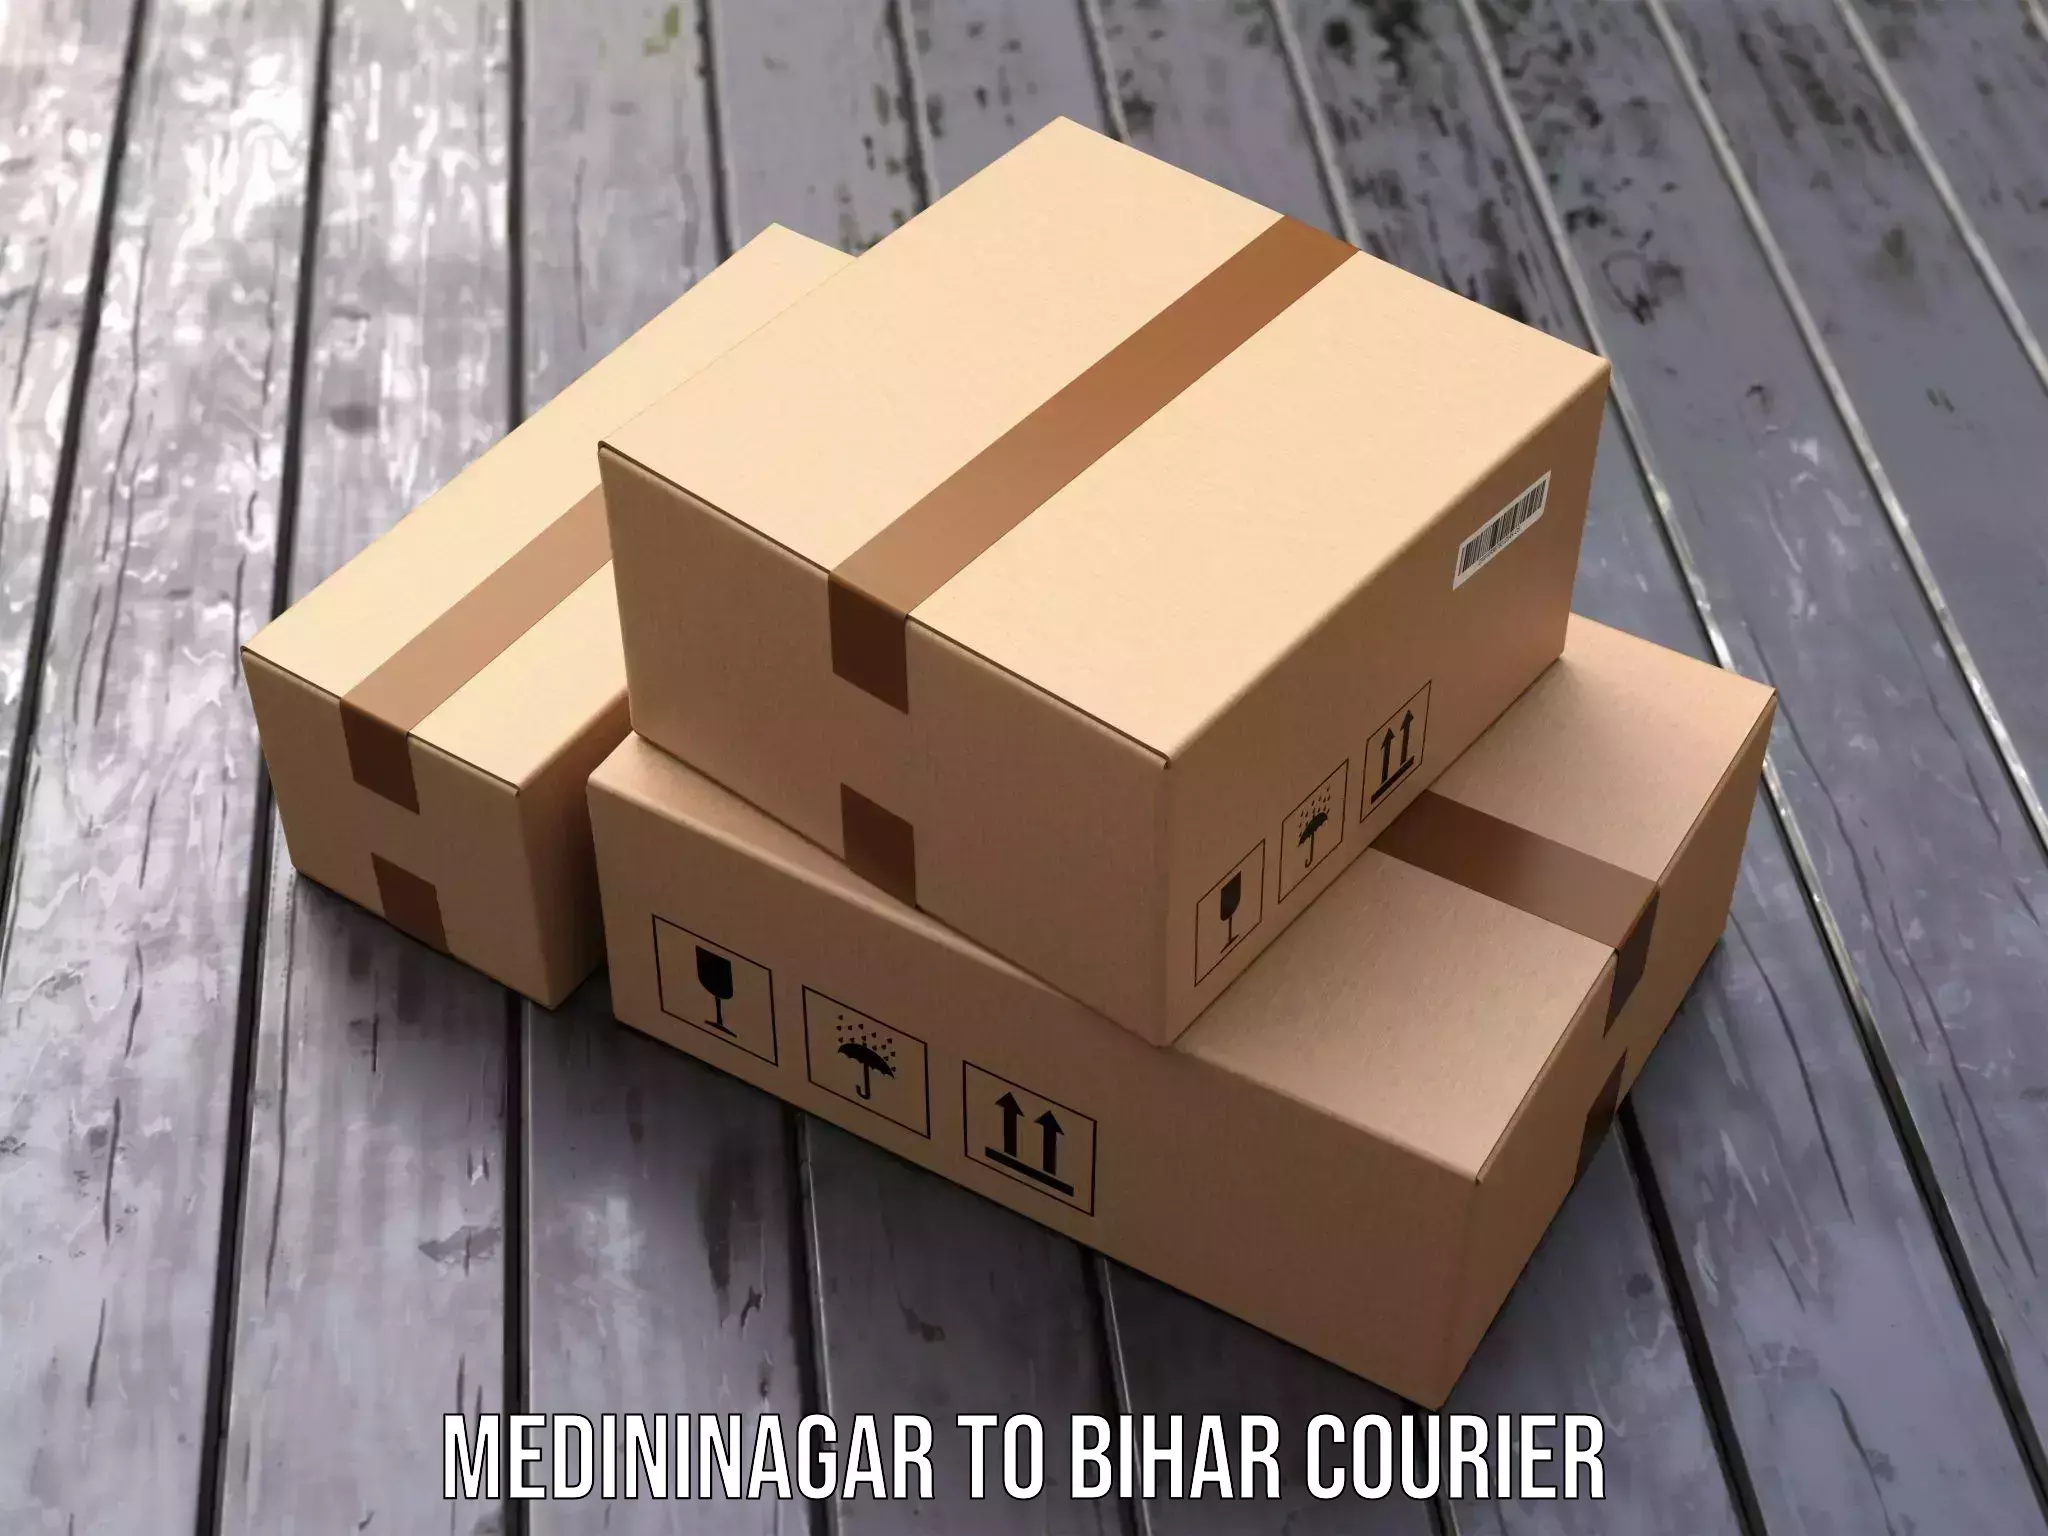 Fast delivery service Medininagar to Bihar